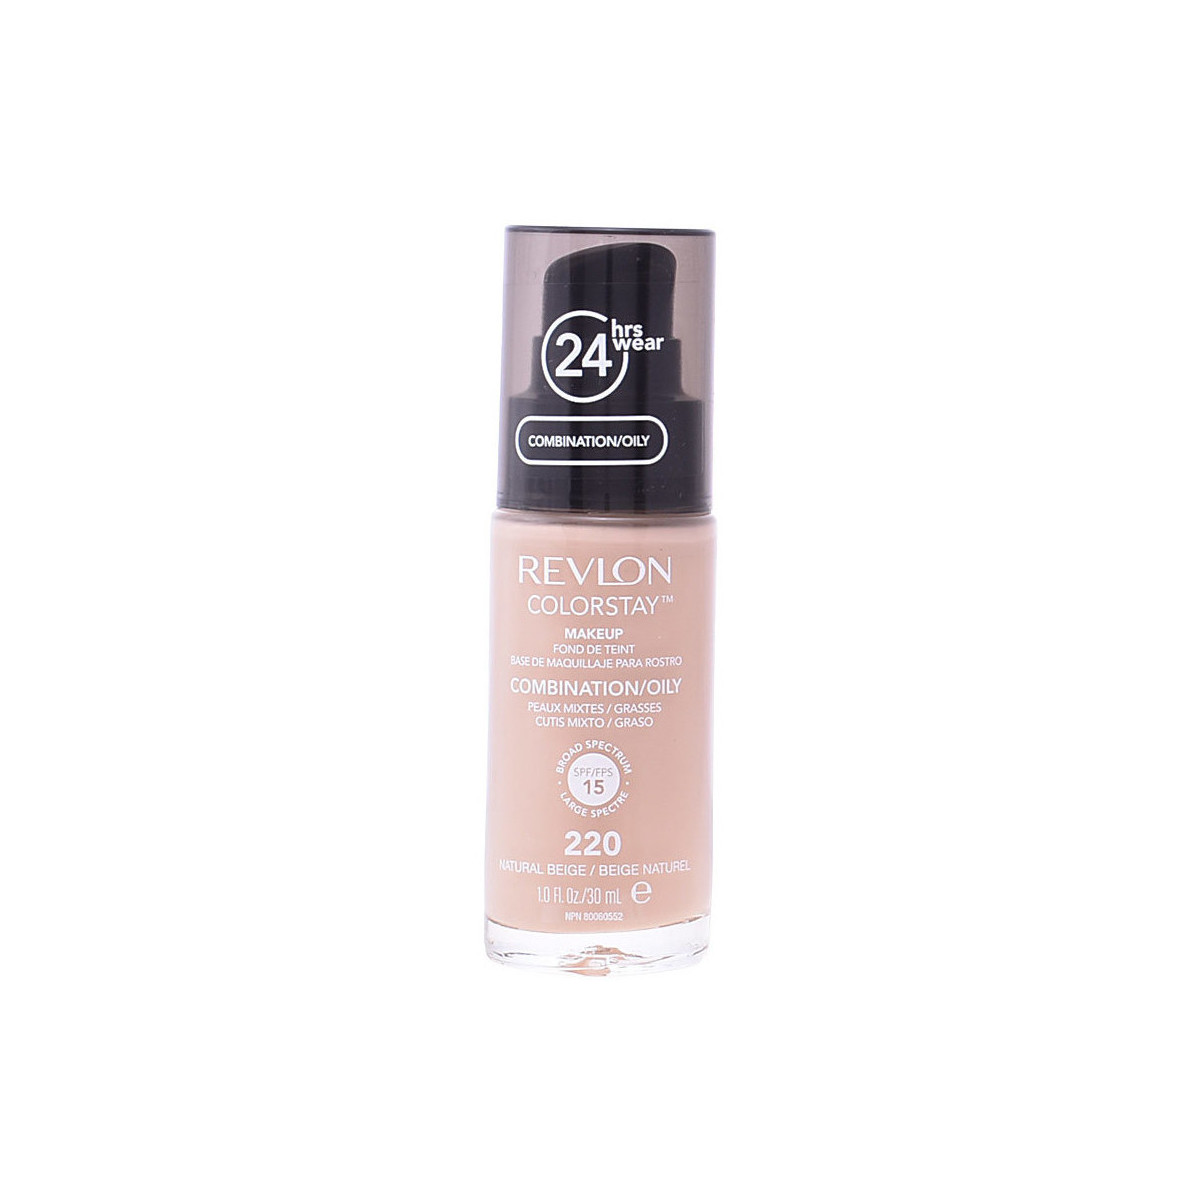 Beauty Make-up & Foundation  Revlon Colorstay Foundation Combination/oily Skin 220-naturl Beige 